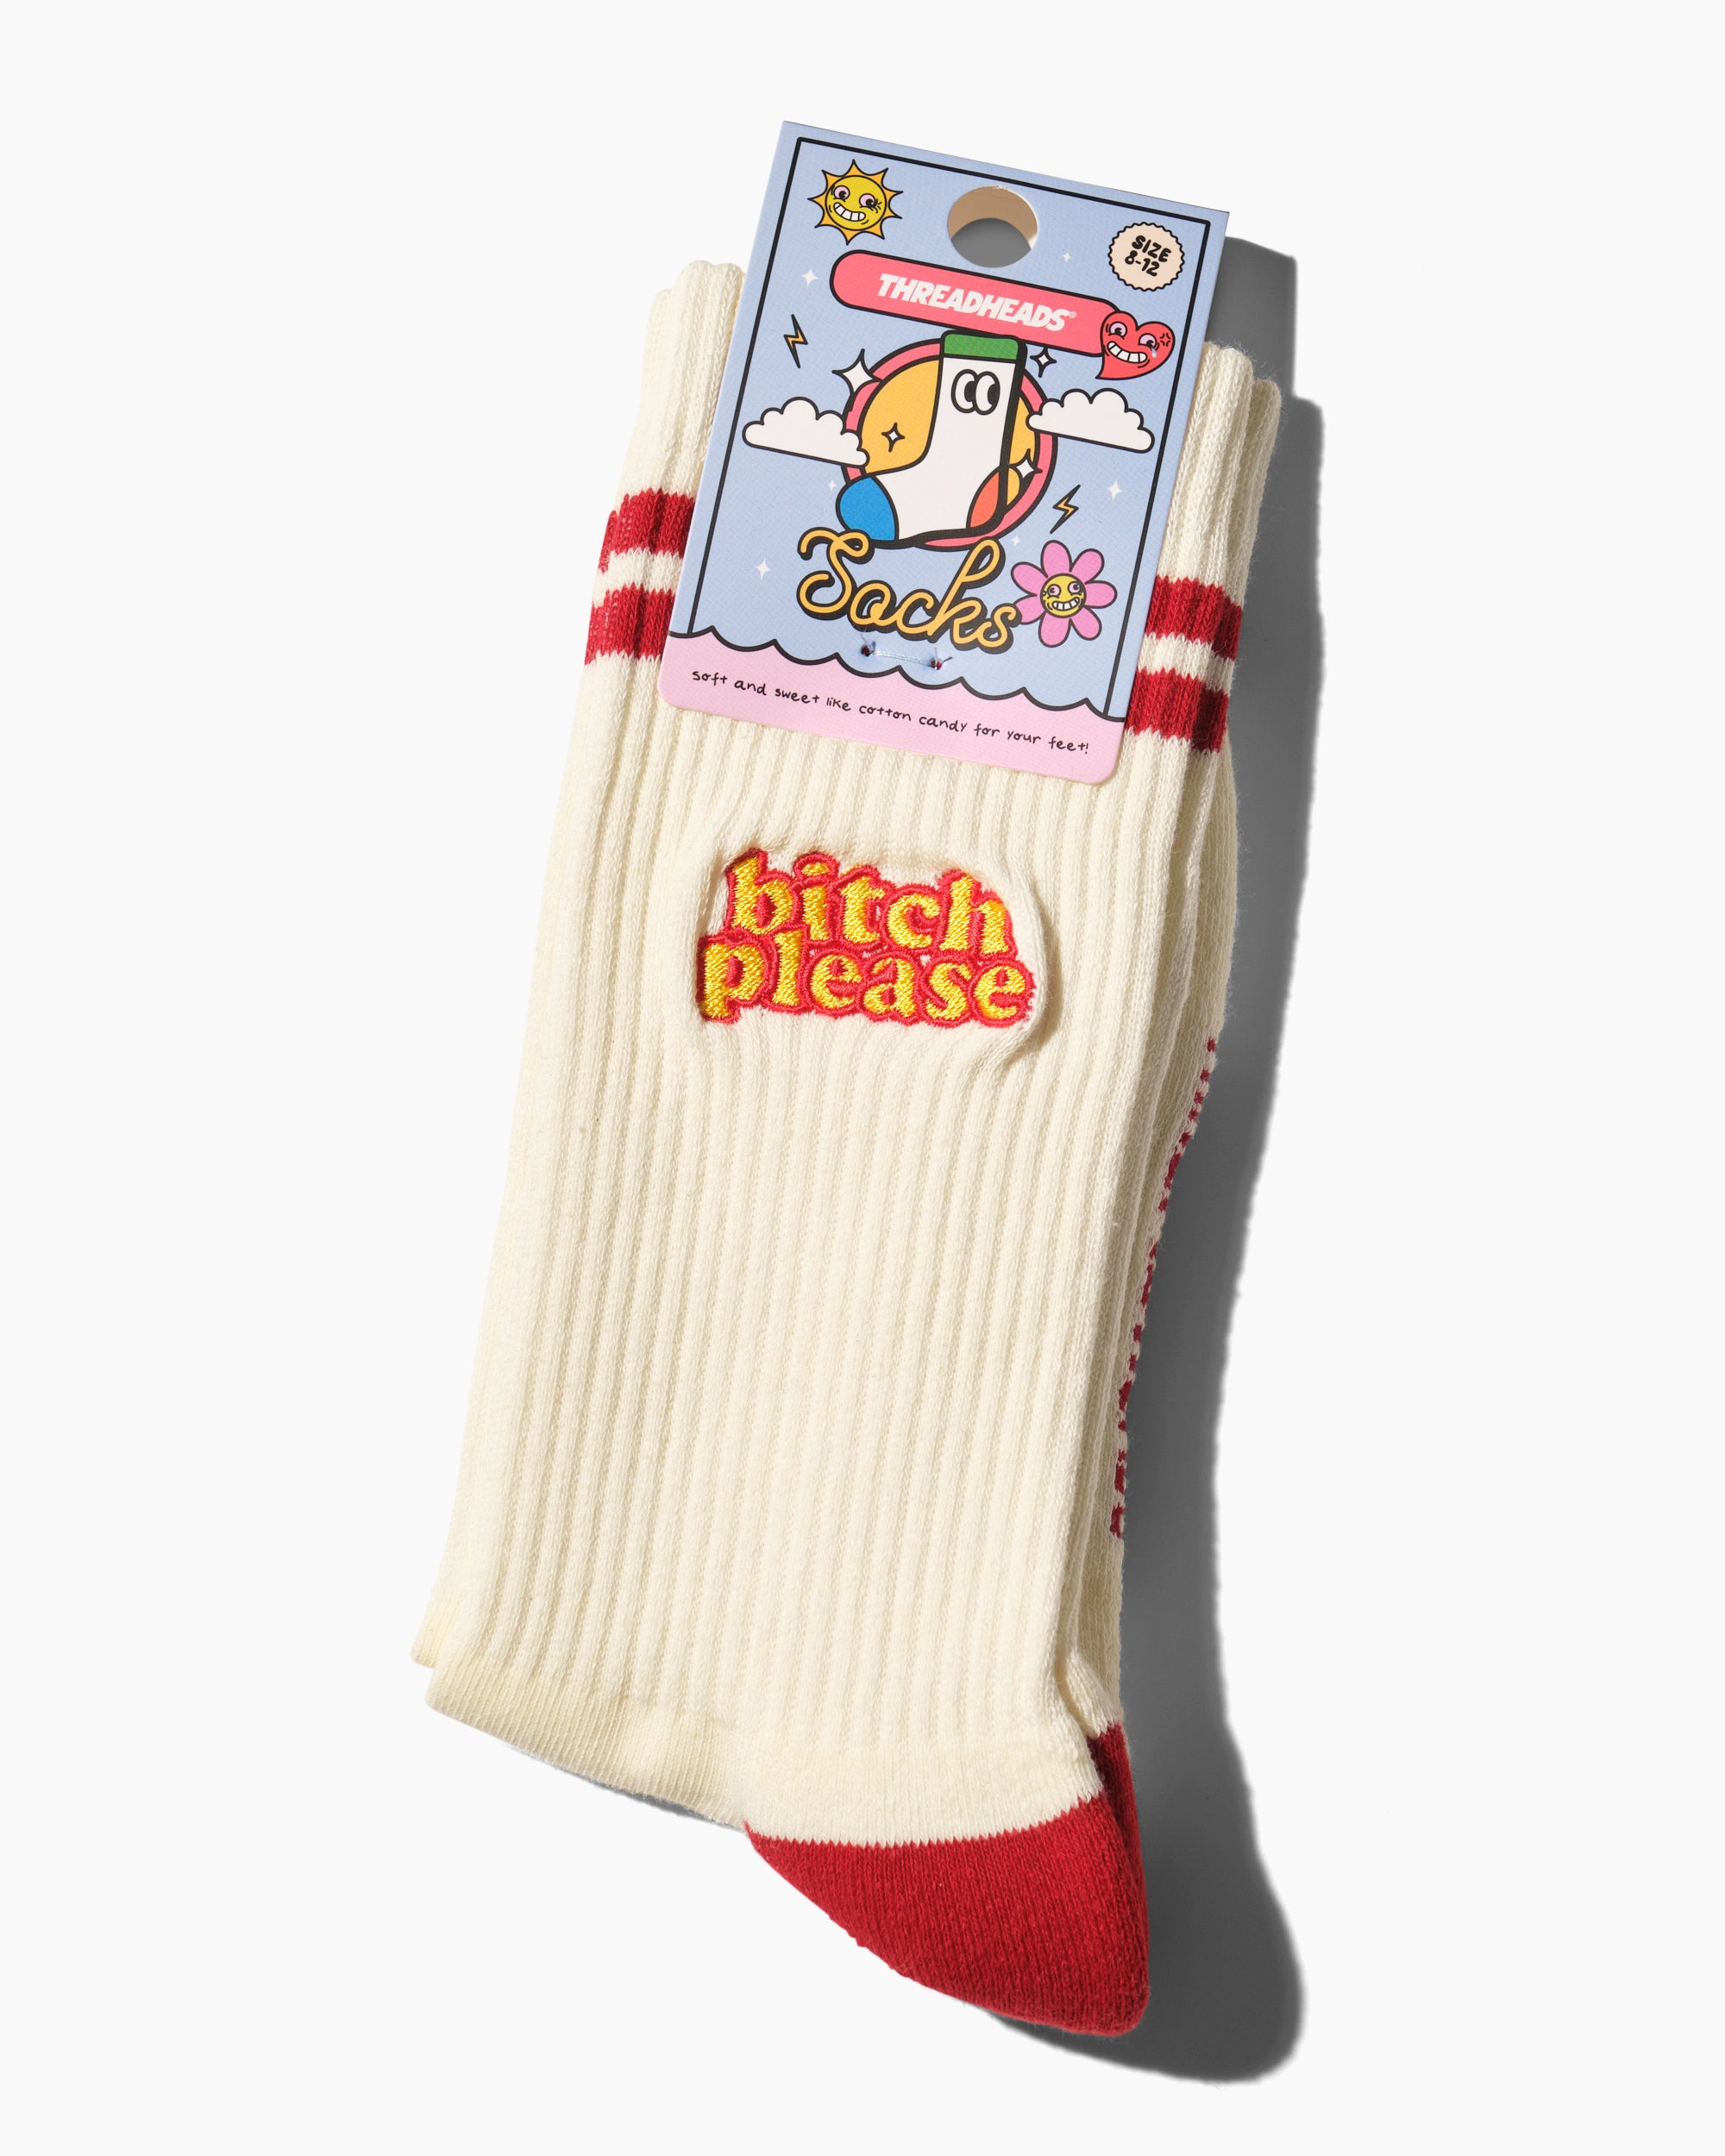 Bitch Please Socks